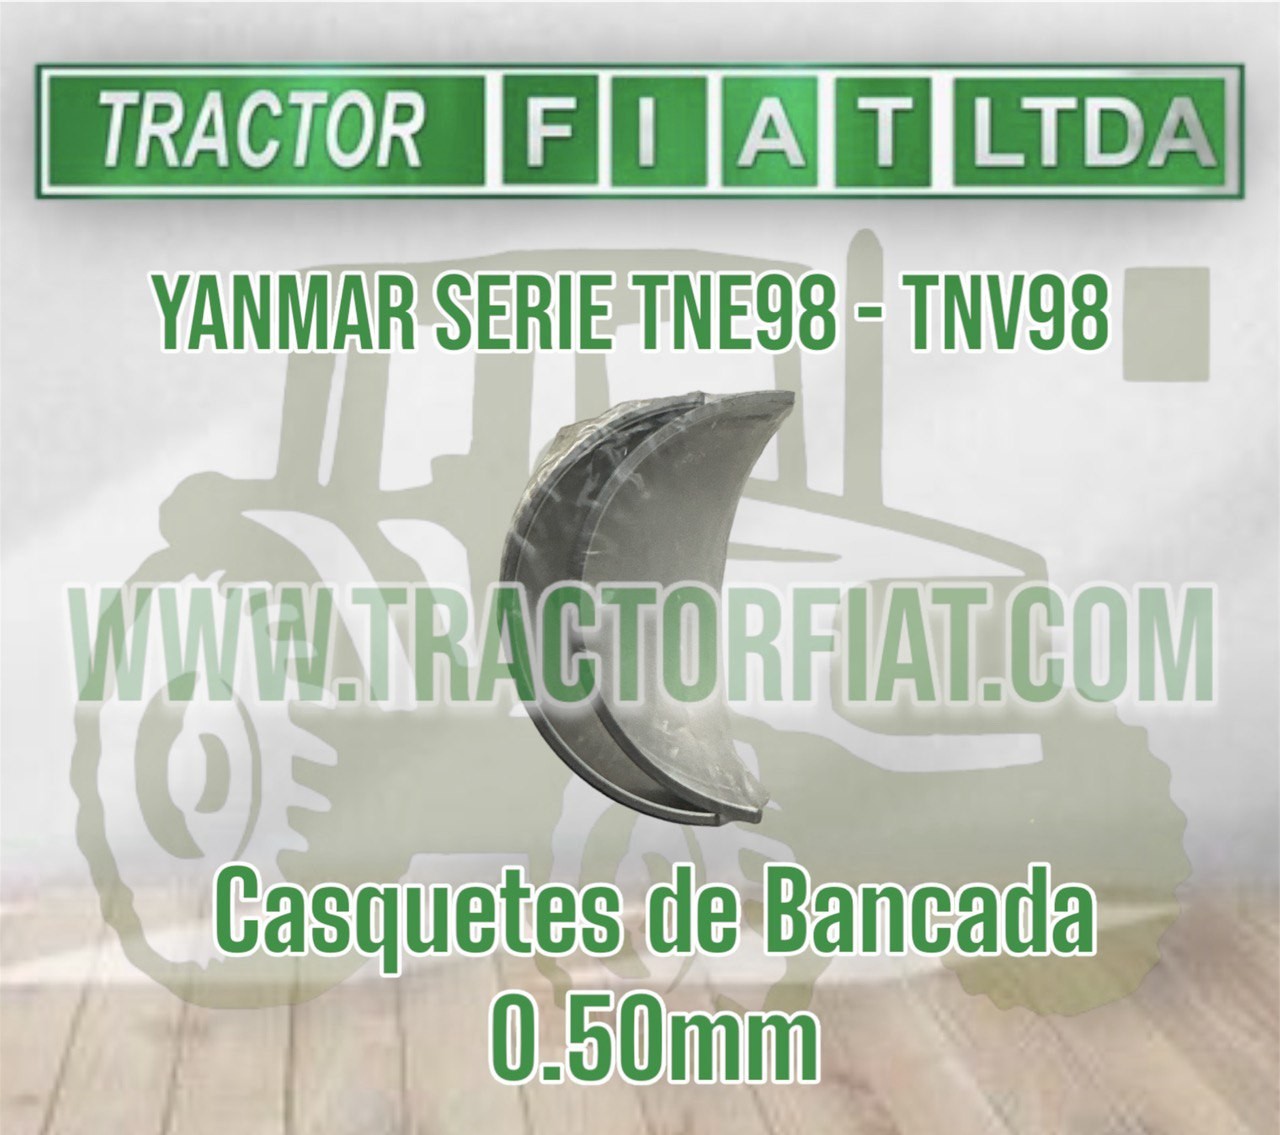 CASQUETES DE BANCADA 0.50mm - MOTOR YANMAR SERIES TNE98/TNV98